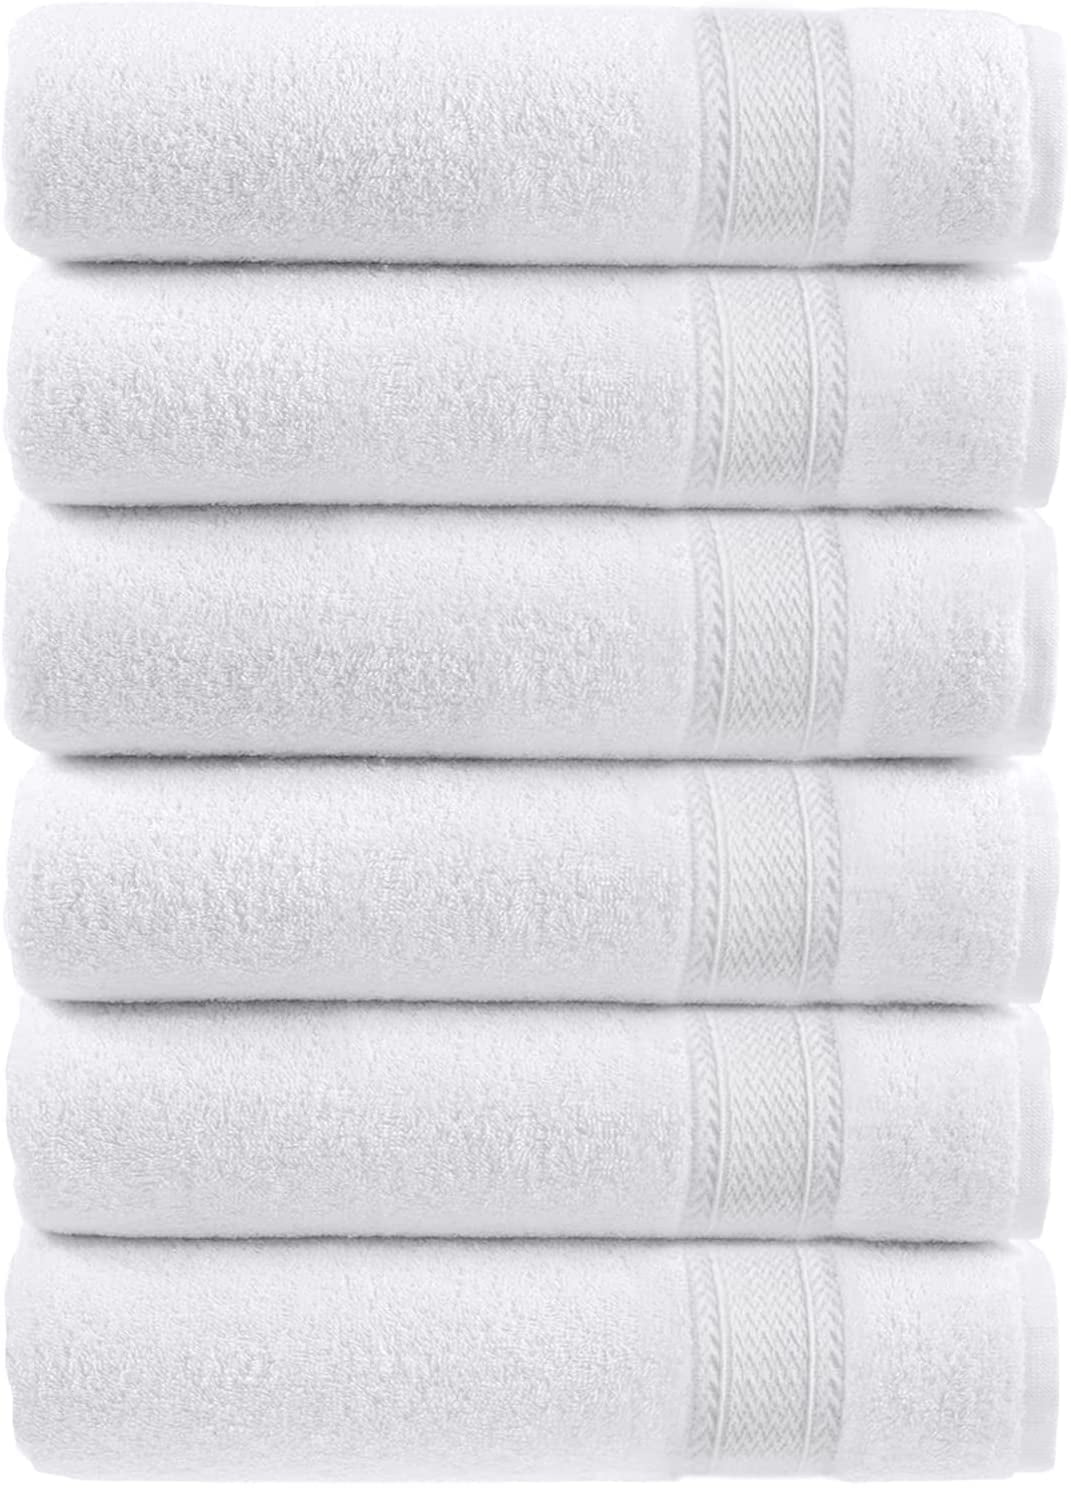 1 new white 16x27 premium hand towels spa salon hotel resort plush absorbent 